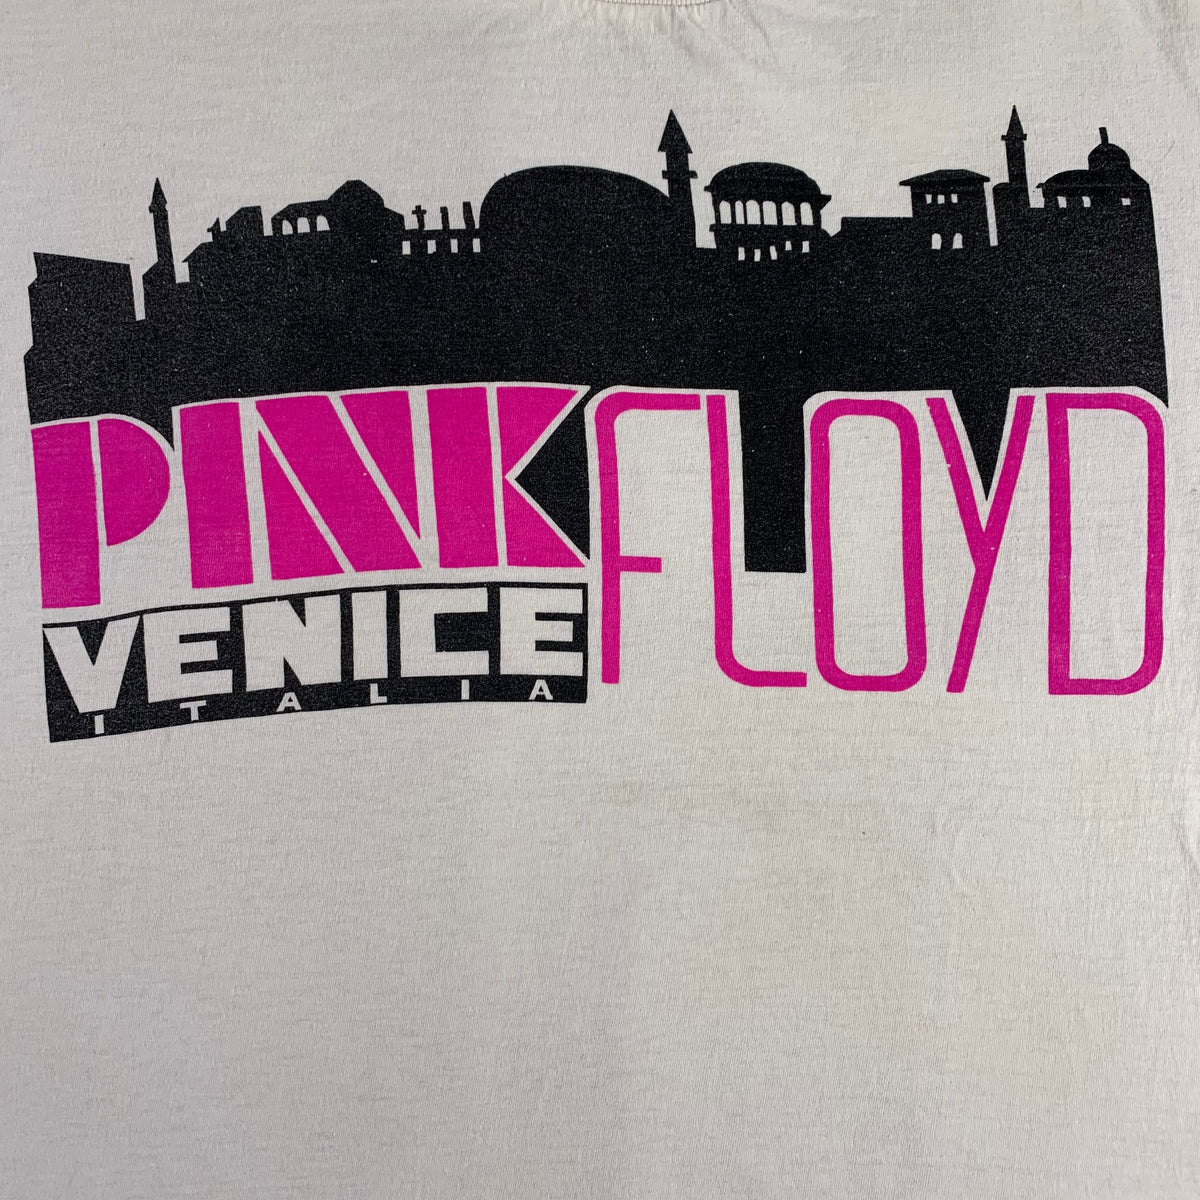 Vintage Pink Floyd &quot;Venice Italia&quot; T-Shirt